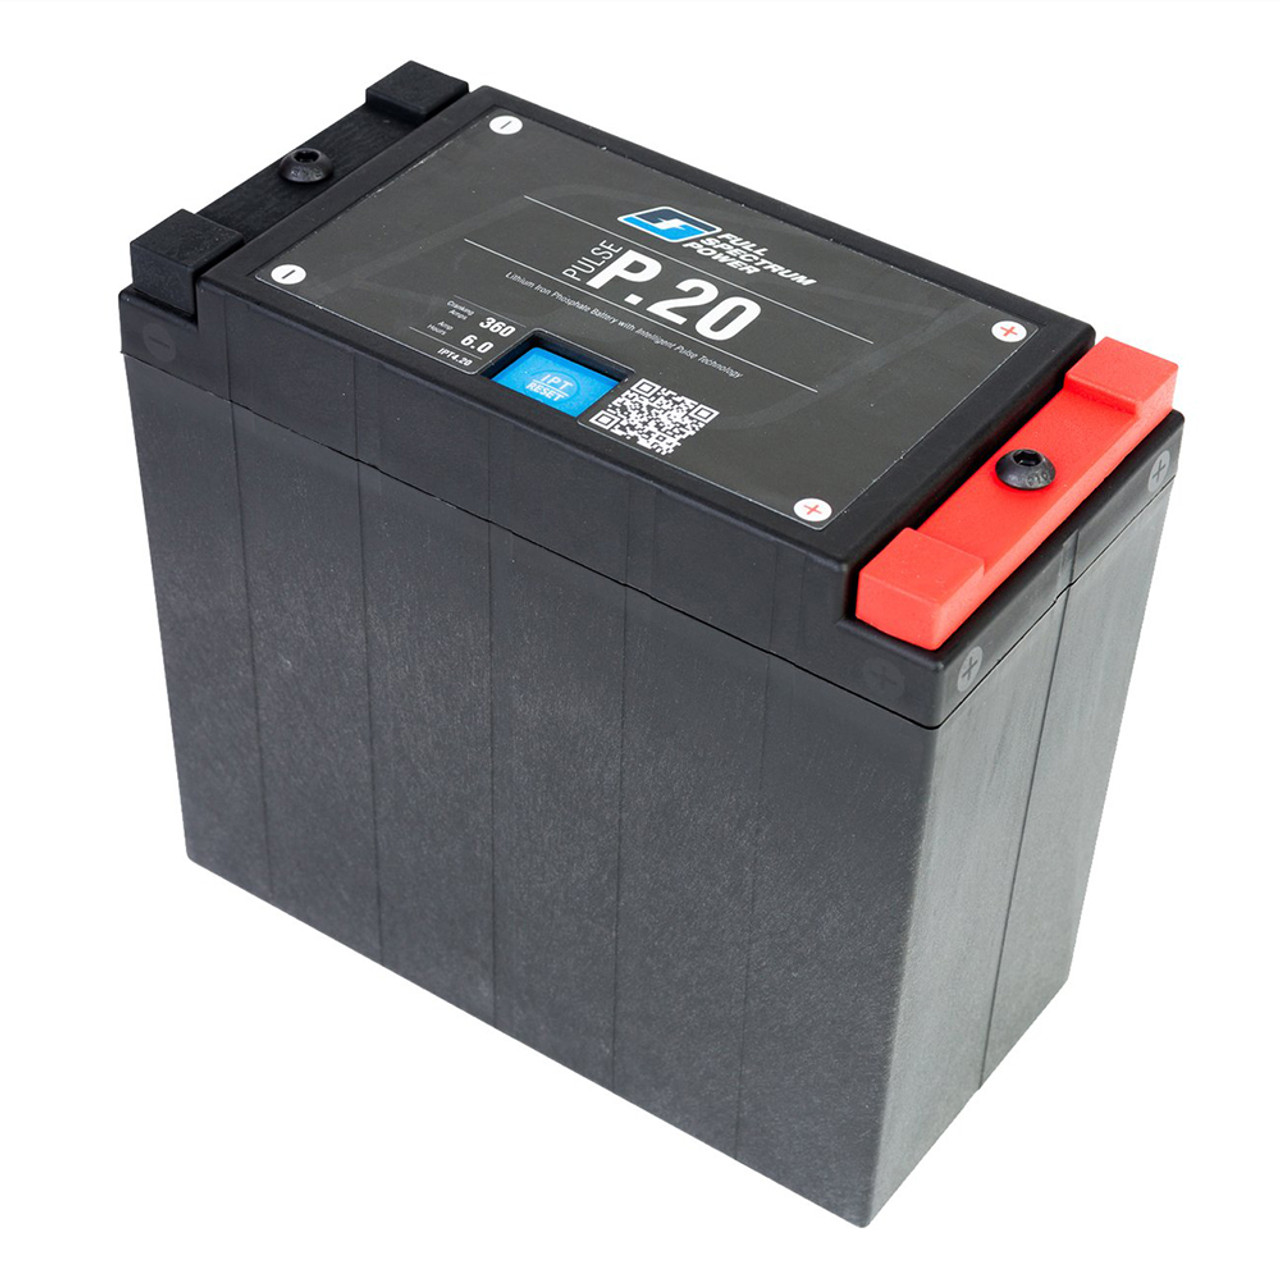  KDXY Compatible with Battery Impact 326M Portable Aspirato,  704-0754-01, 750, 754, 754 Eagle Uni-Vent, 754 Eagle : Health & Household